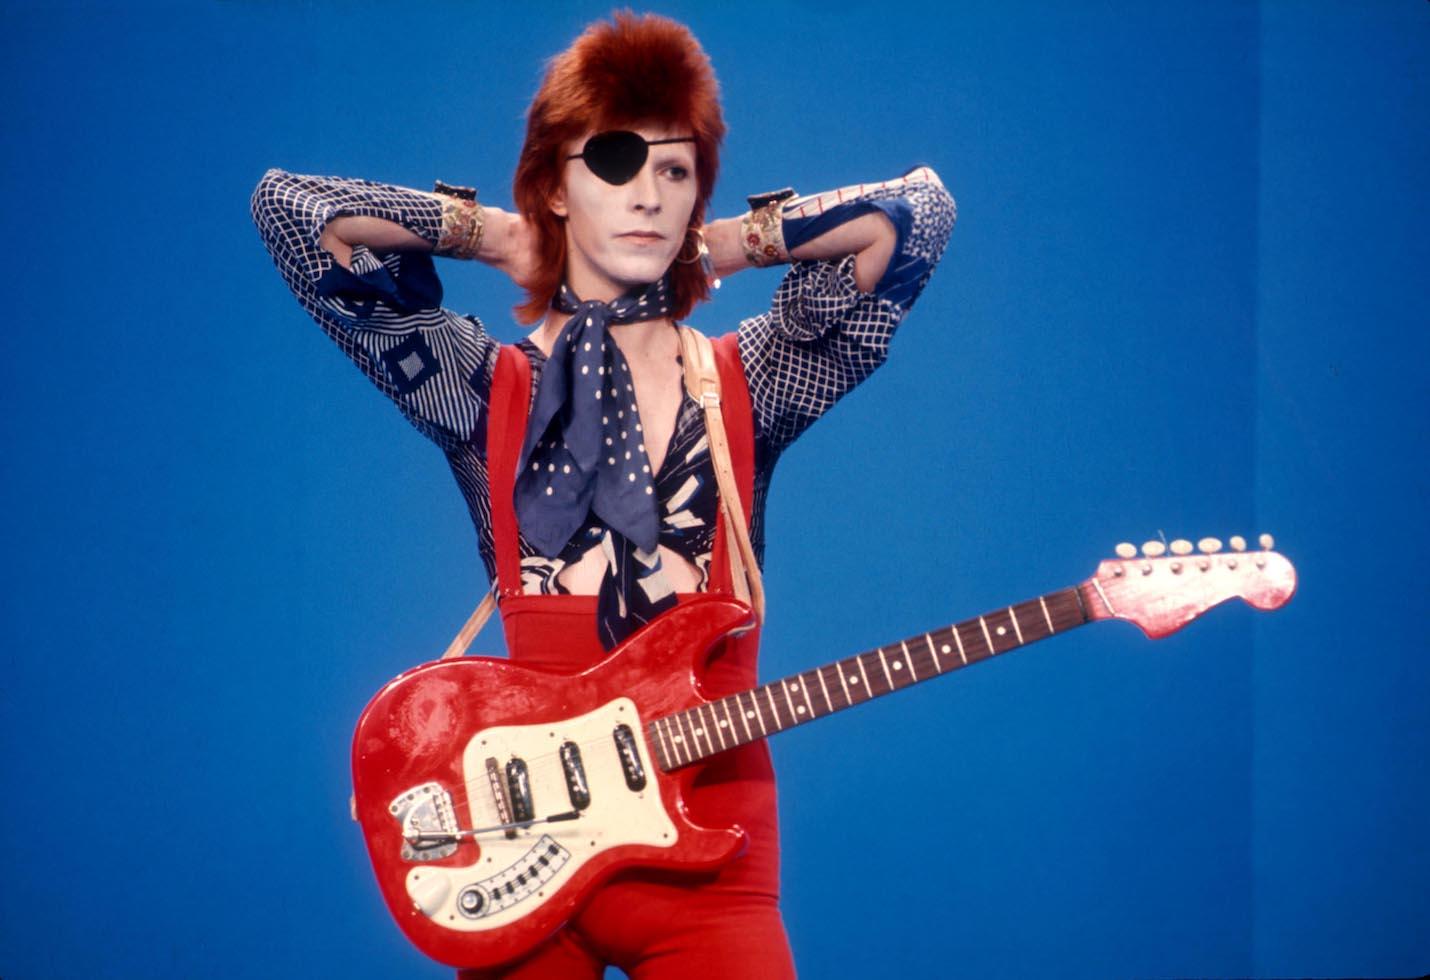 Barry Schultz Color Photograph - David Bowie "Rebel Rebel" Dutch TV appearance